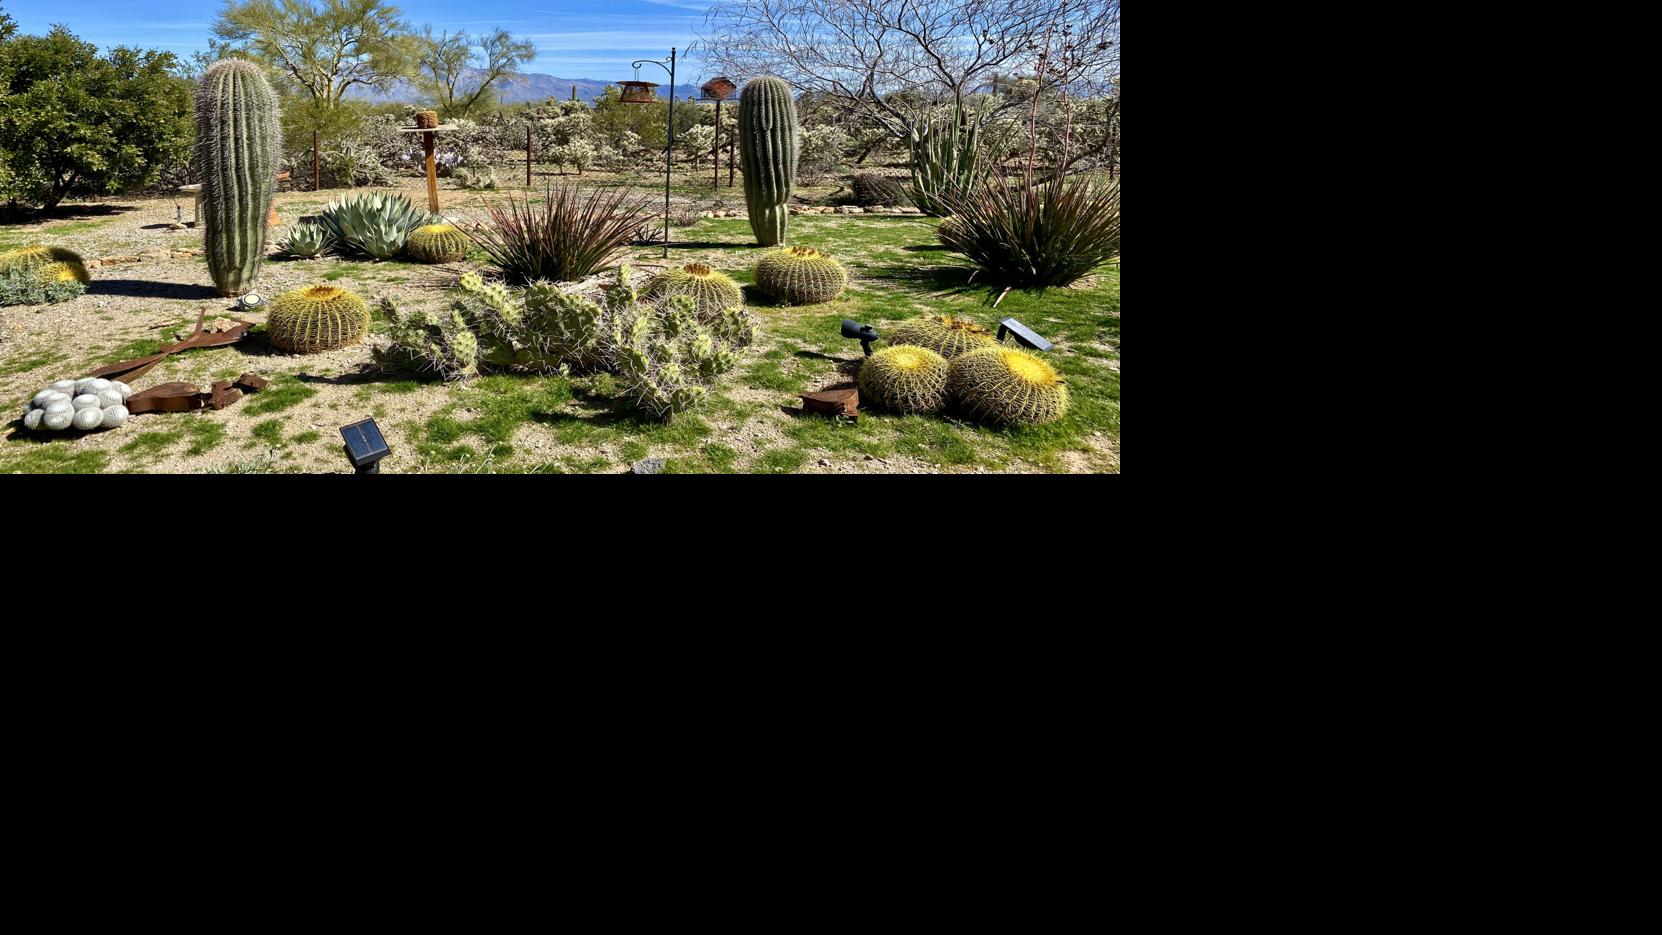 Take a walk through the gardens of Tucson’s expert green thumbs